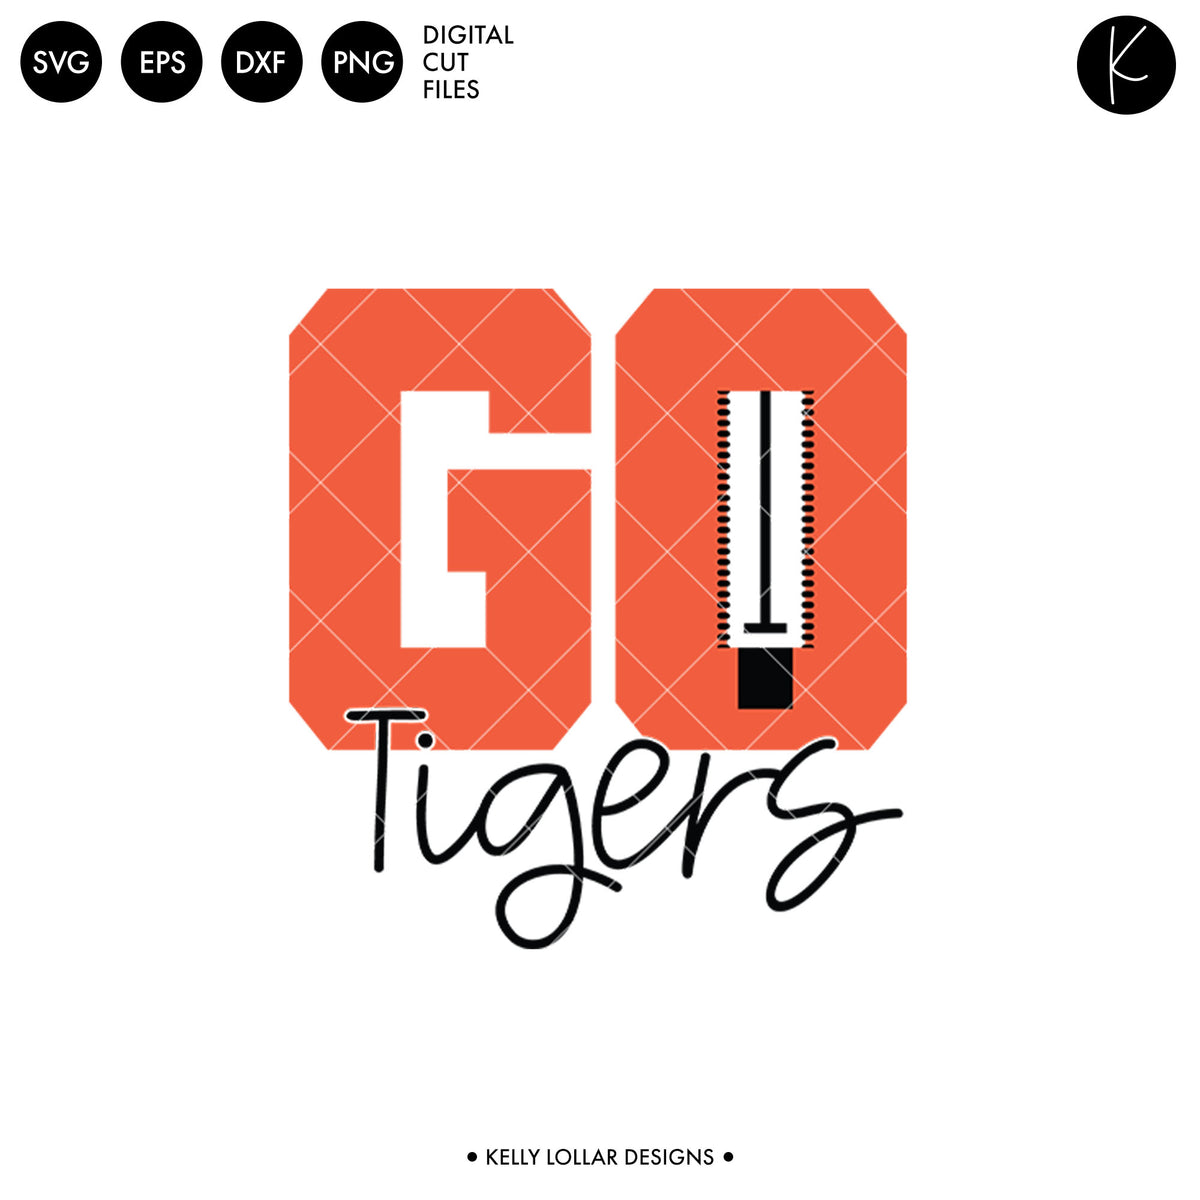 Tigers Swim Bundle | SVG DXF EPS PNG Cut Files